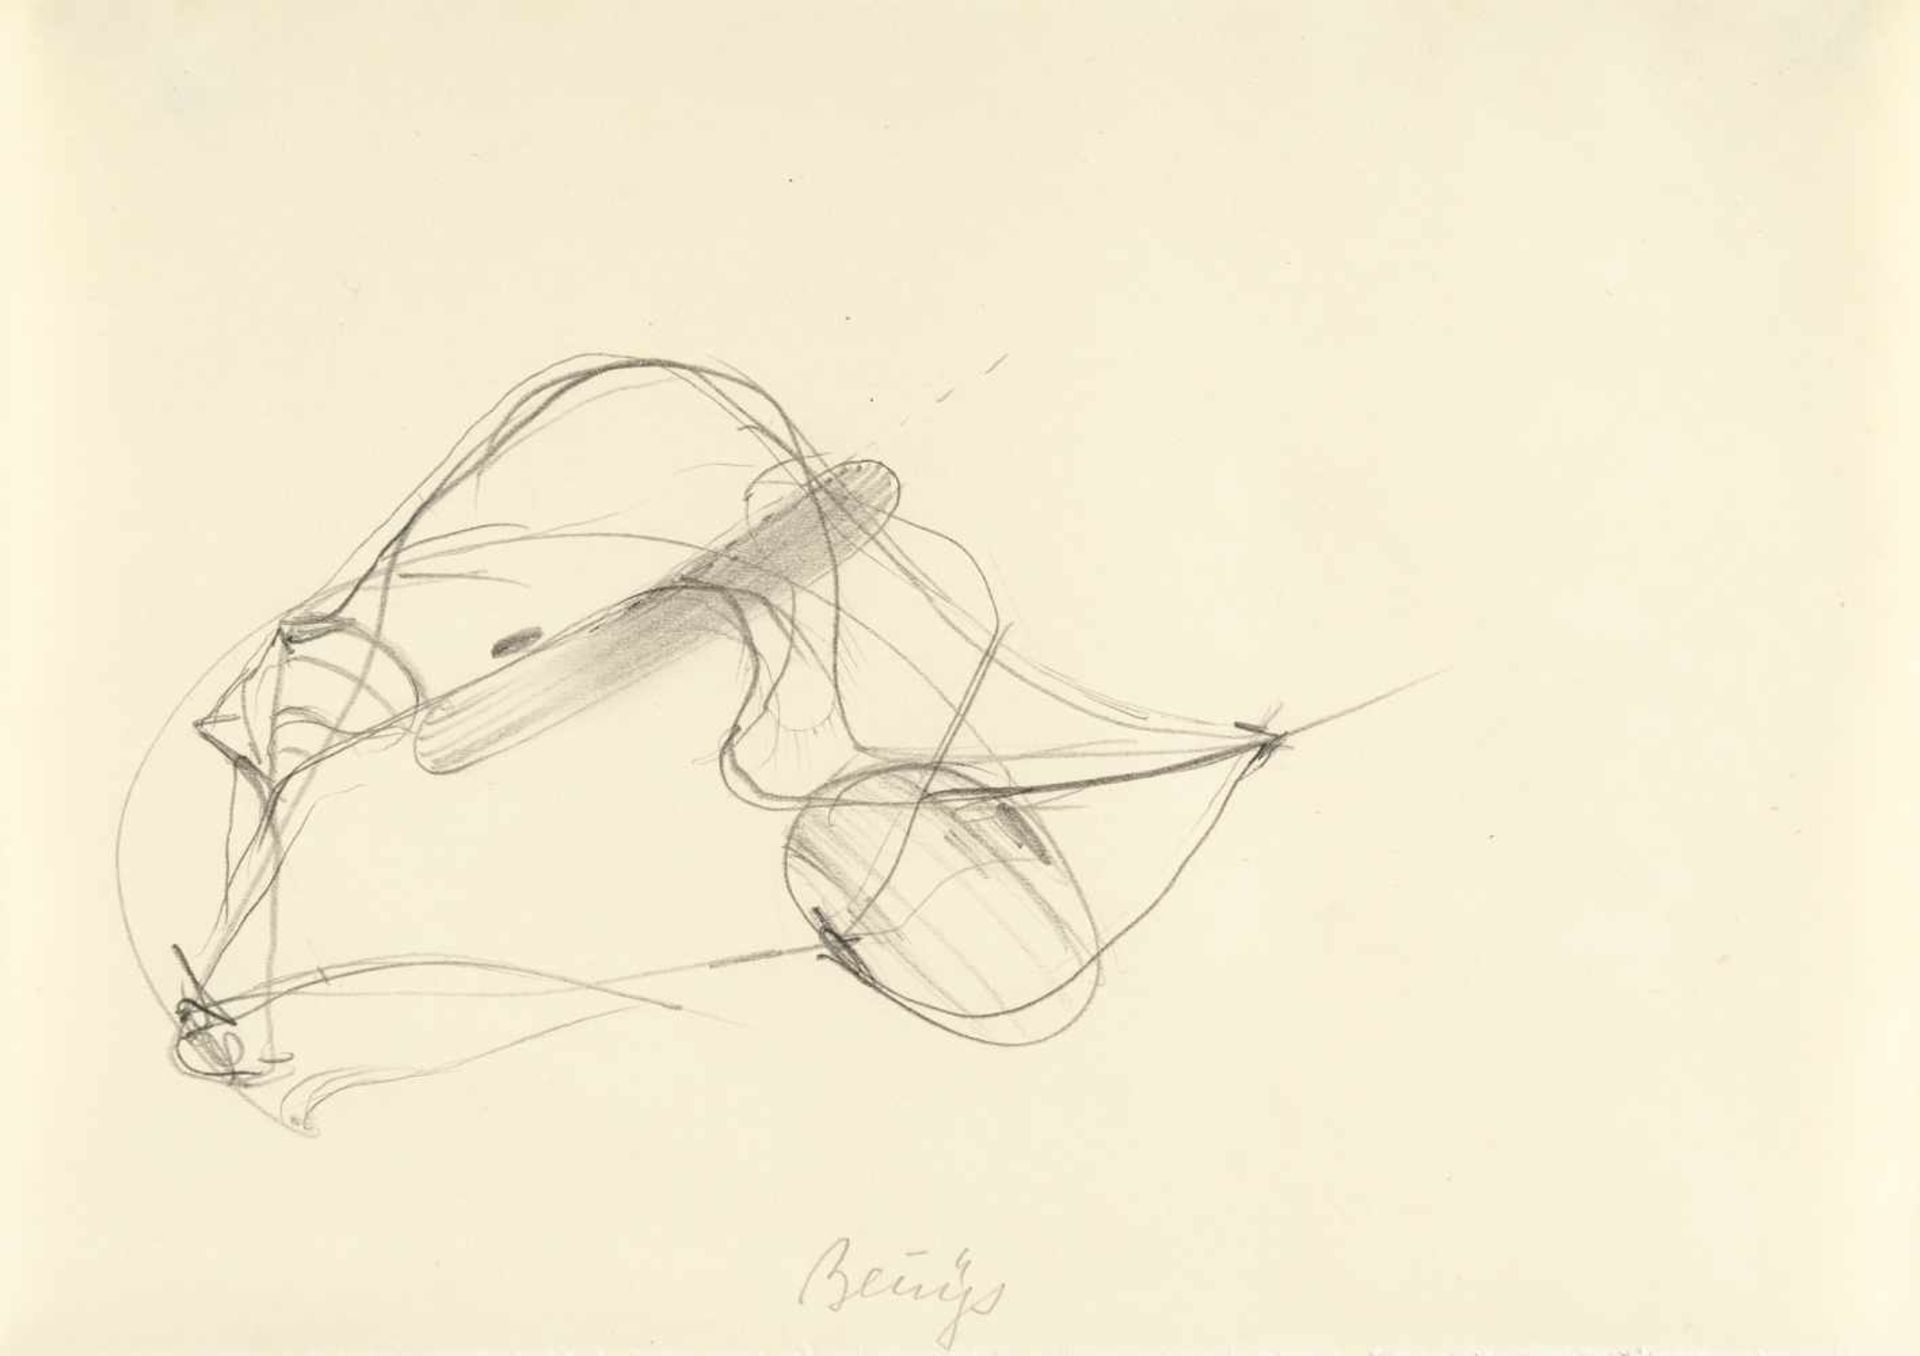 Joseph Beuys1921 Krefeld - Düsseldorf 1986Ohne TitelBleistift auf Velin. (Um 1960). Ca. 14,5 x 21,